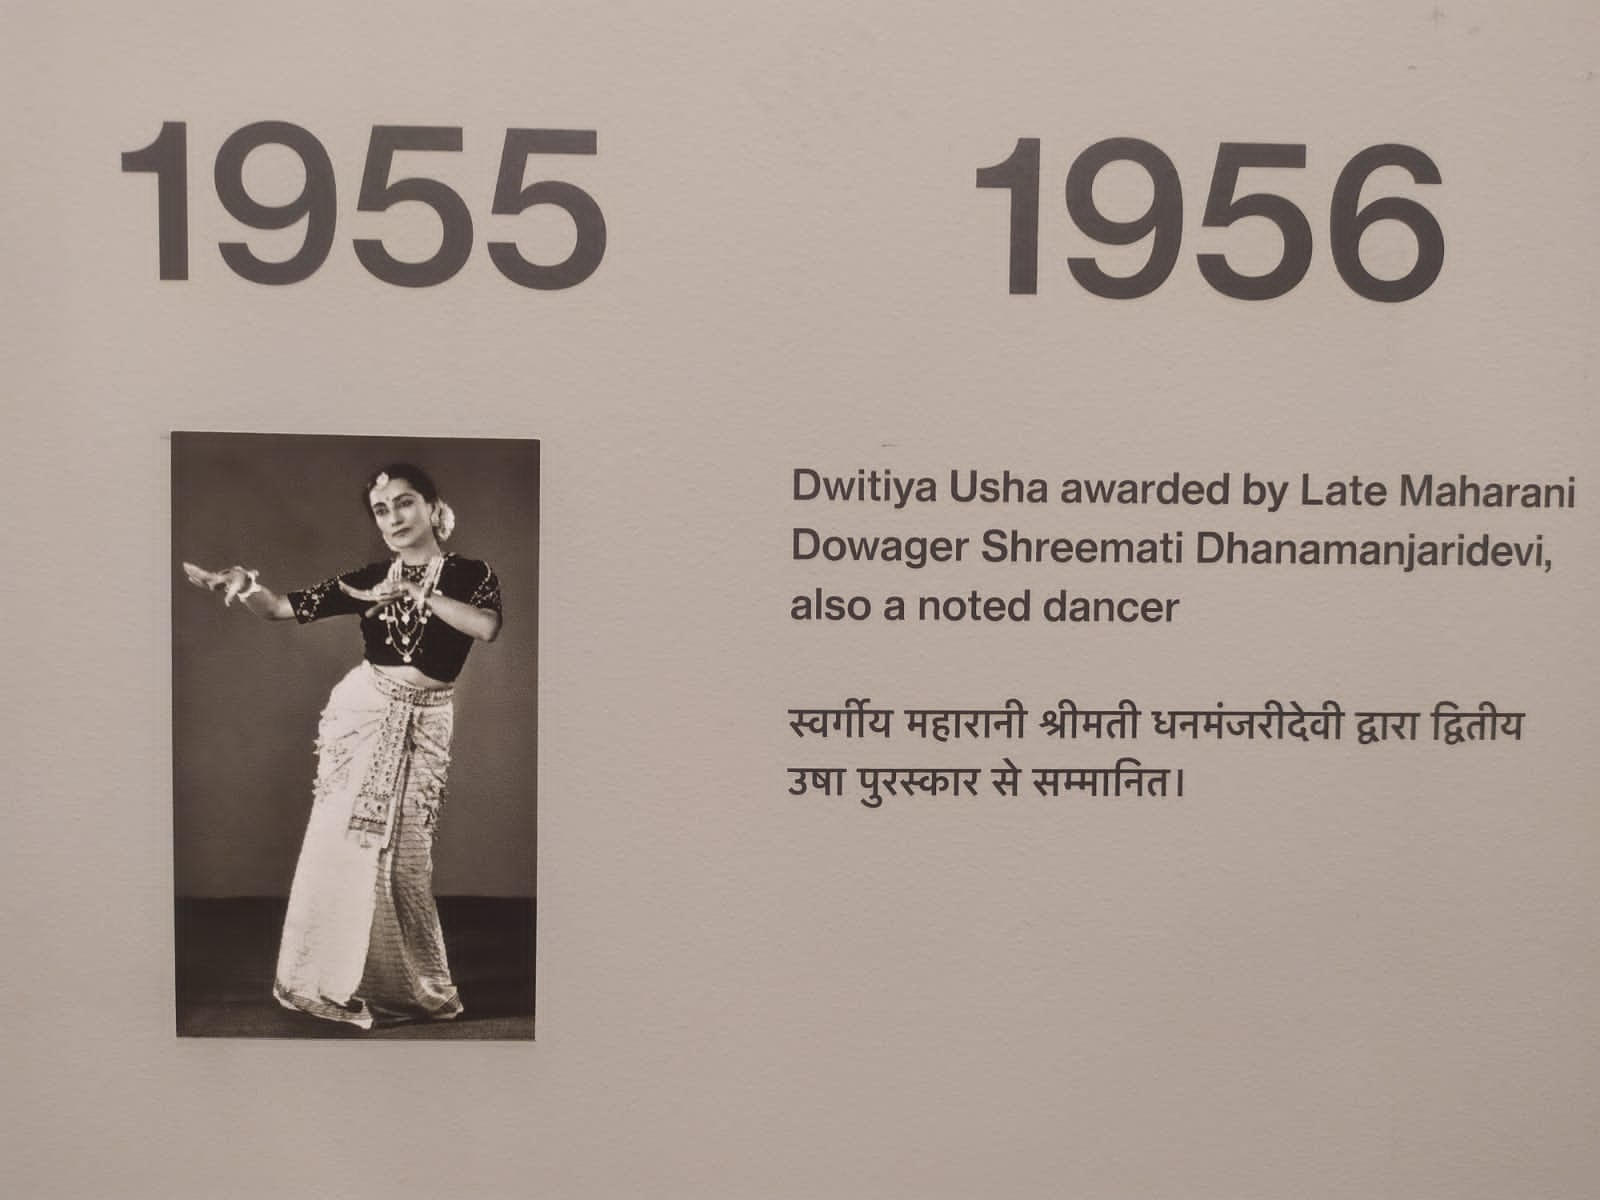  Museum dedicated to Manipuri dancer and scholar Savitadidi Mehta opened in Porbandar 